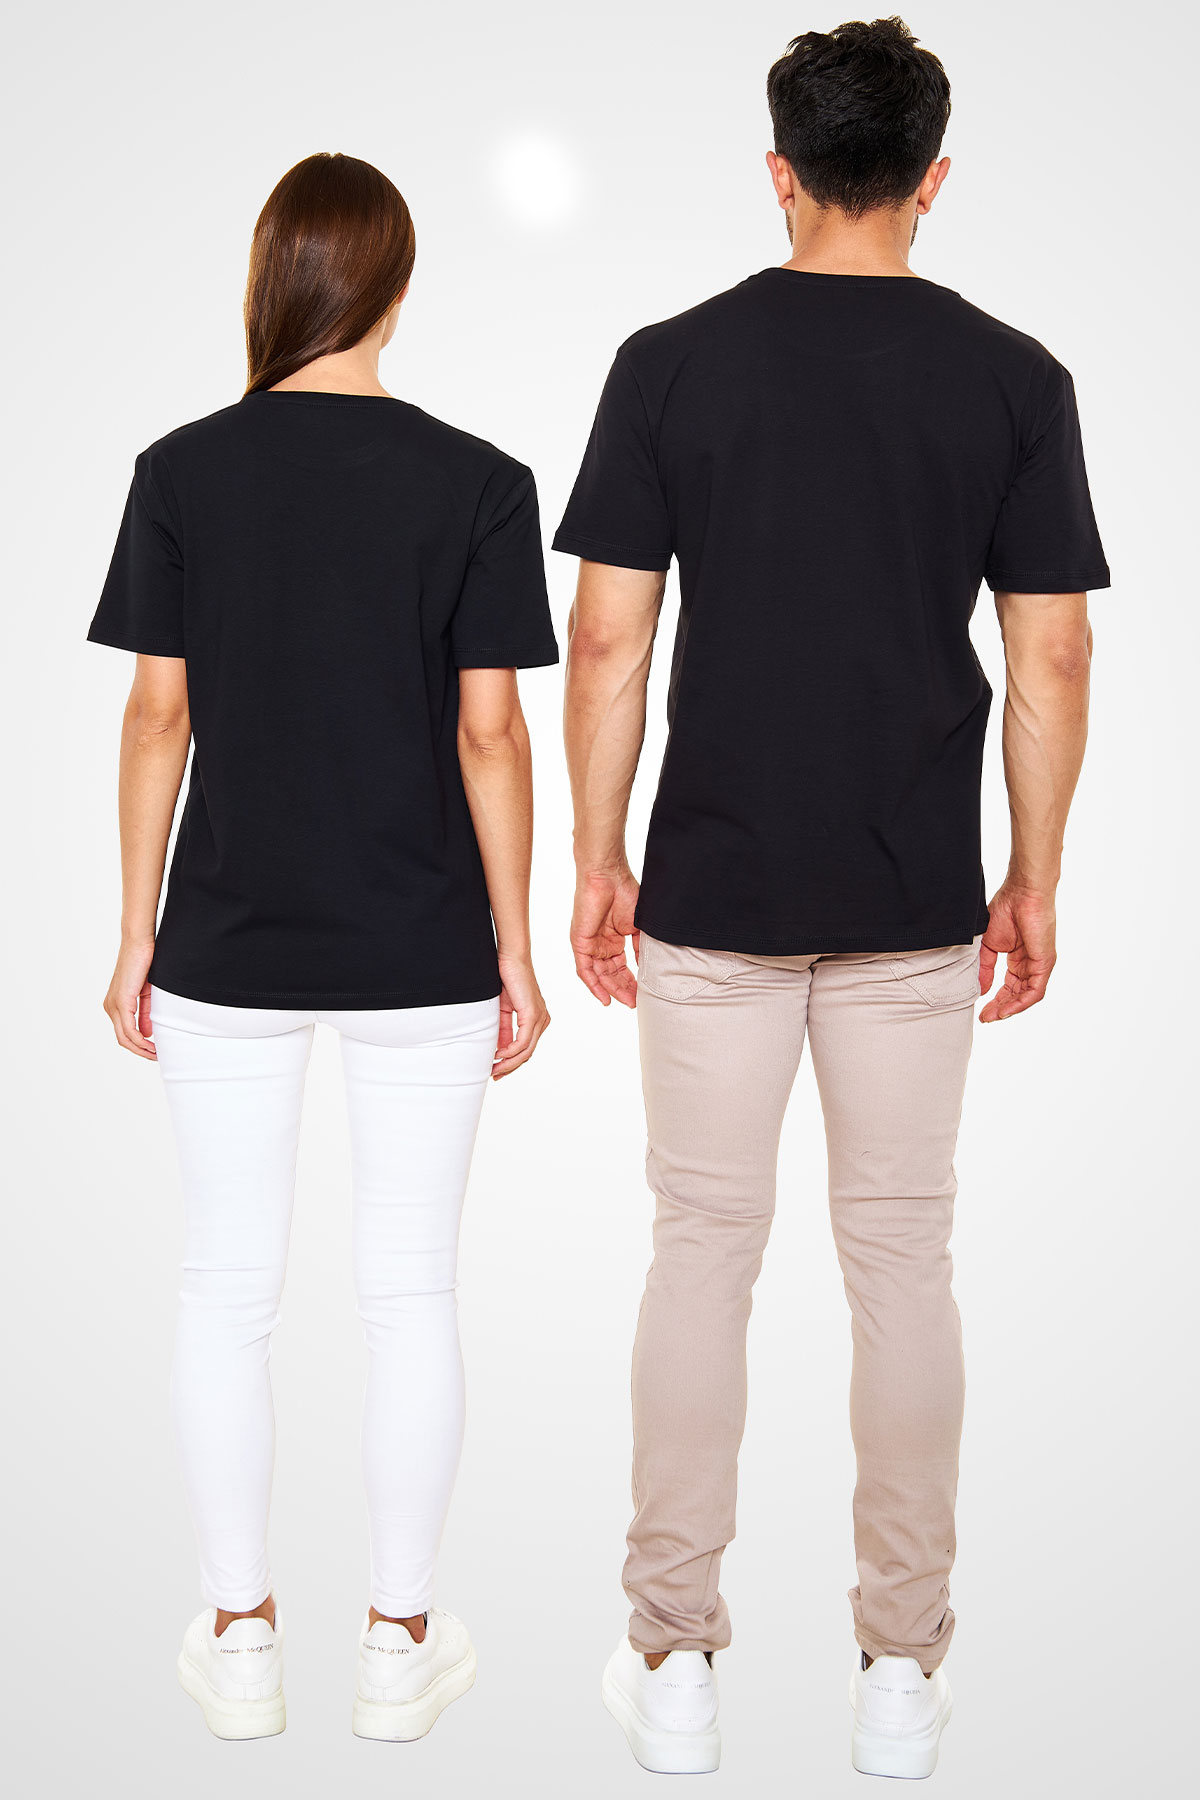 İyi, Kötü ve Çirkin (The Good, the Bad and the Ugly) Baskılı Siyah T-Shirt